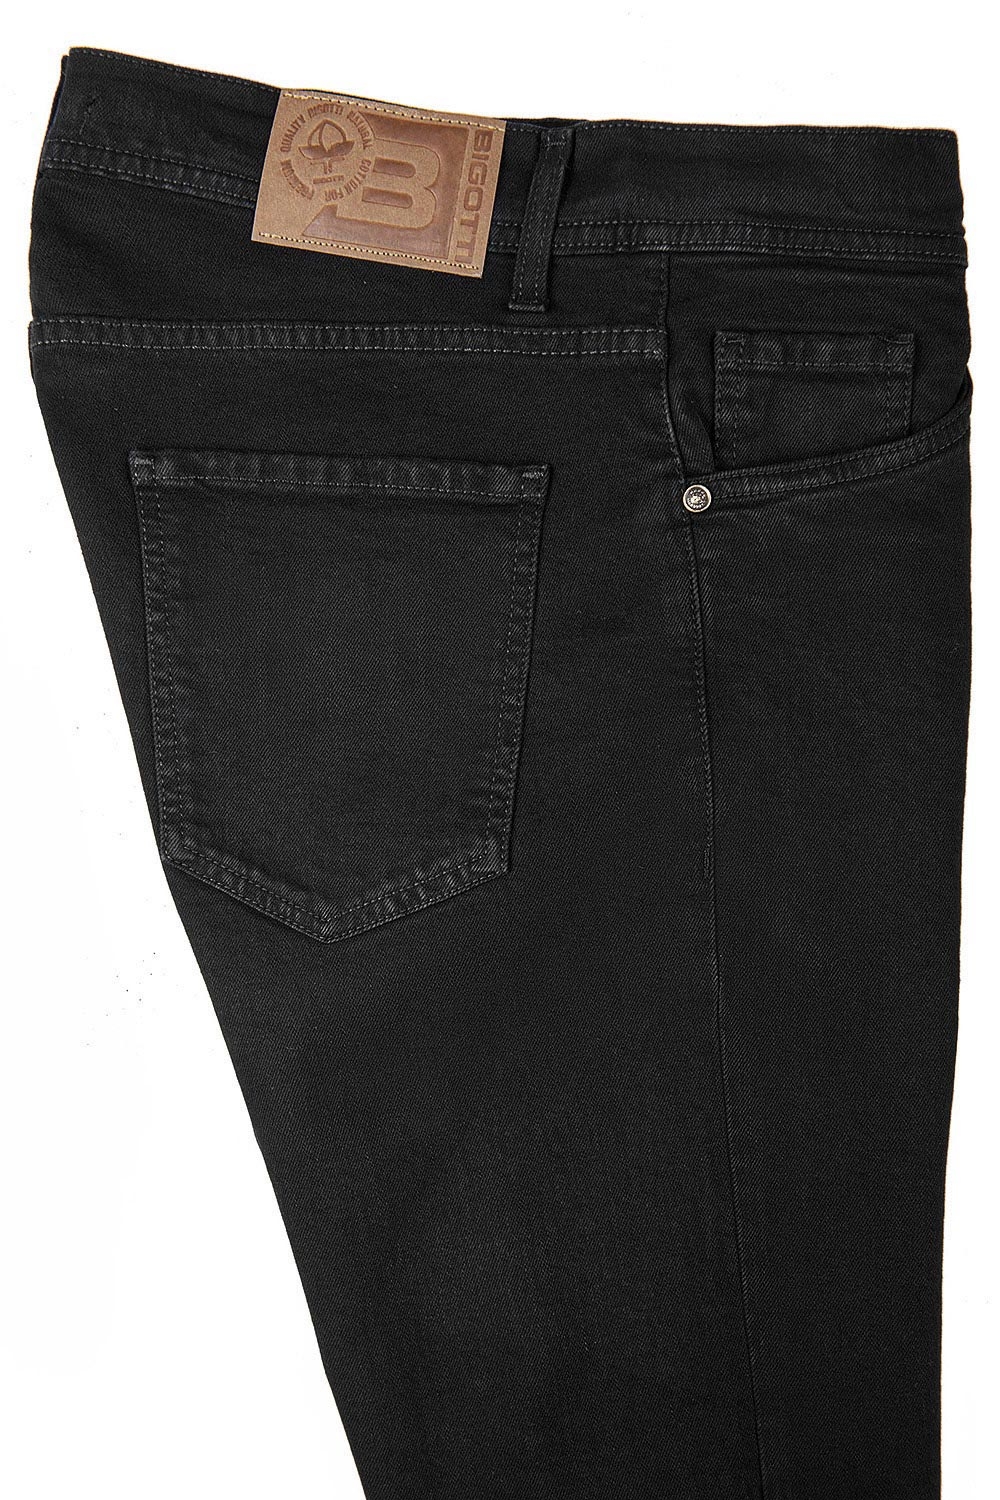 Black jeans 1